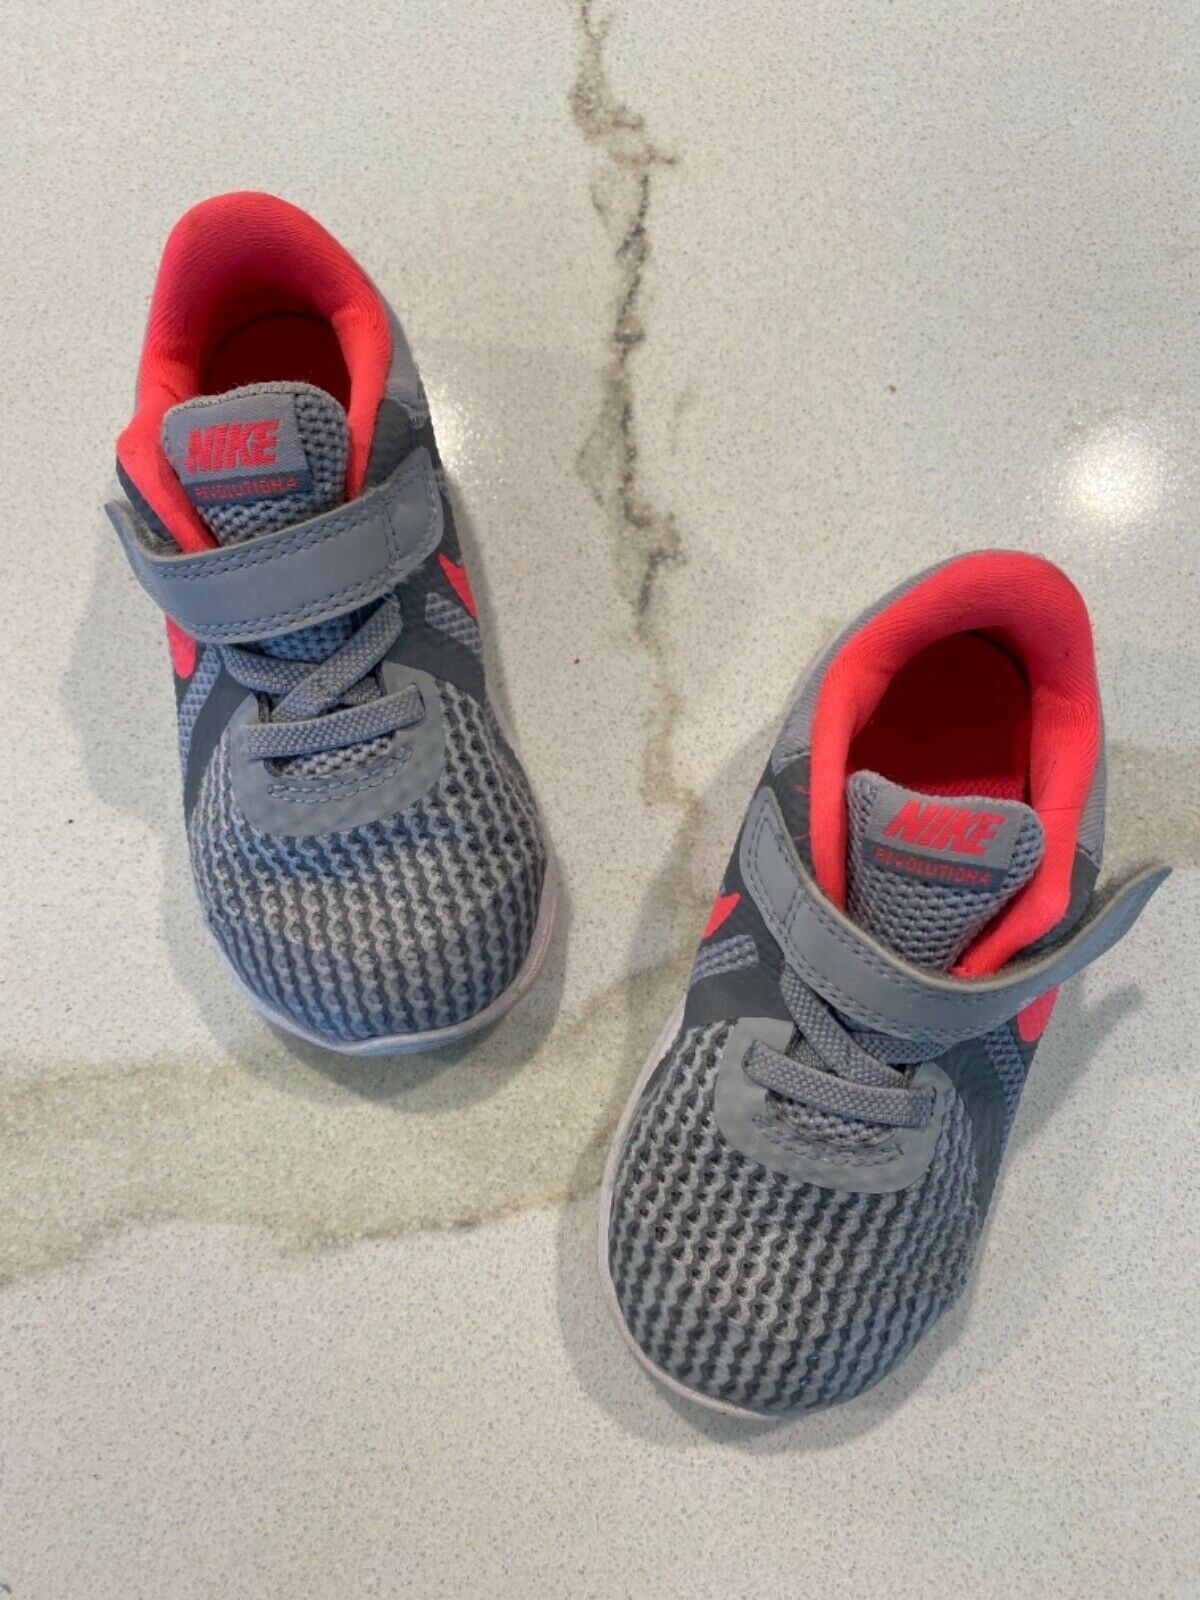 Nike Toddler Kids Shoes Revolution 4 Pink Gray (Infant/Toddler) Size 8C A12